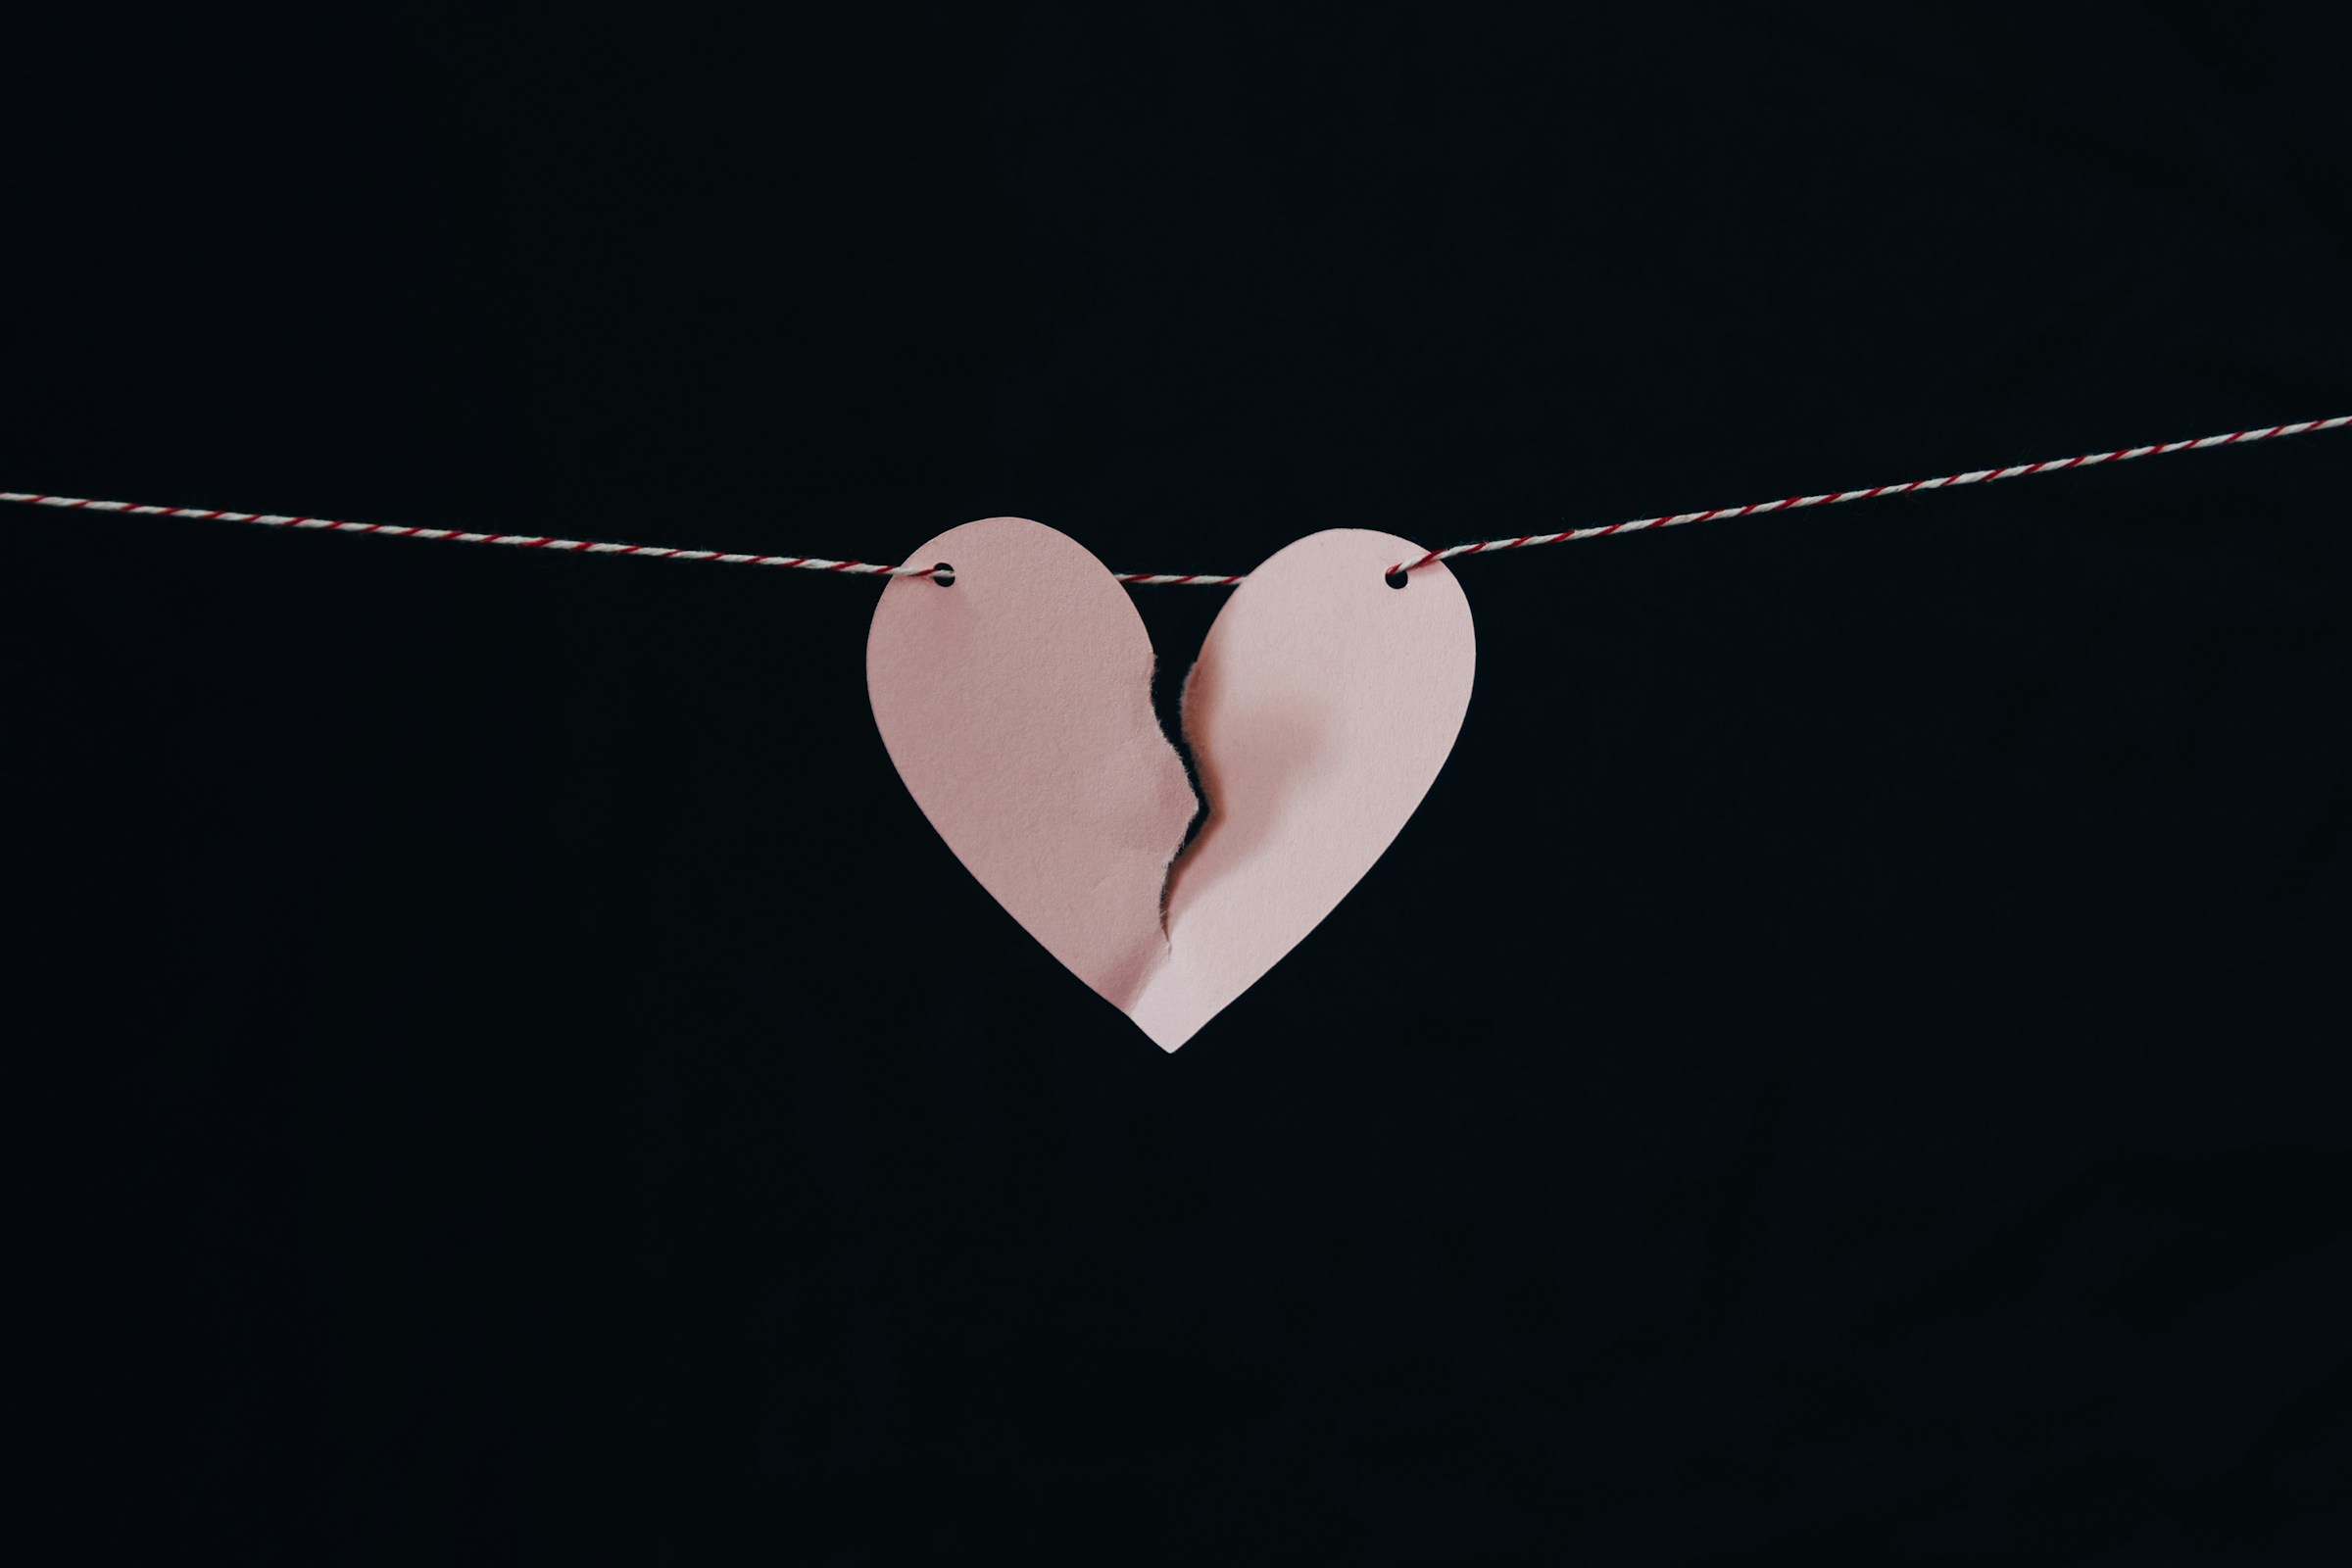 A broken heart handing on a wire | Source: Unsplash